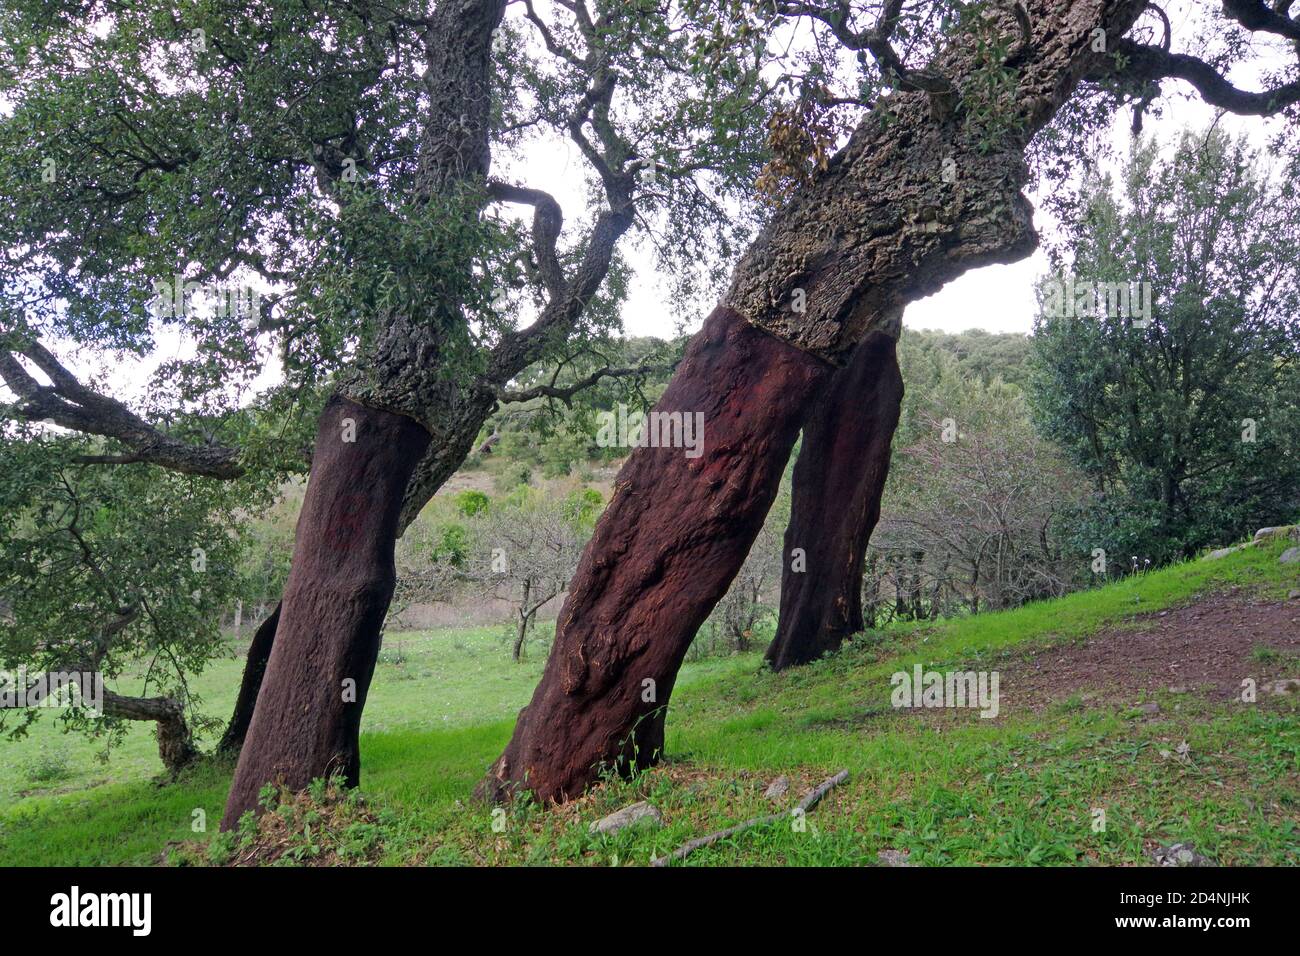 Cork-oak (quercus suber) forest in Pascaredda place, Calangianus, Sardinia, Italy Stock Photo